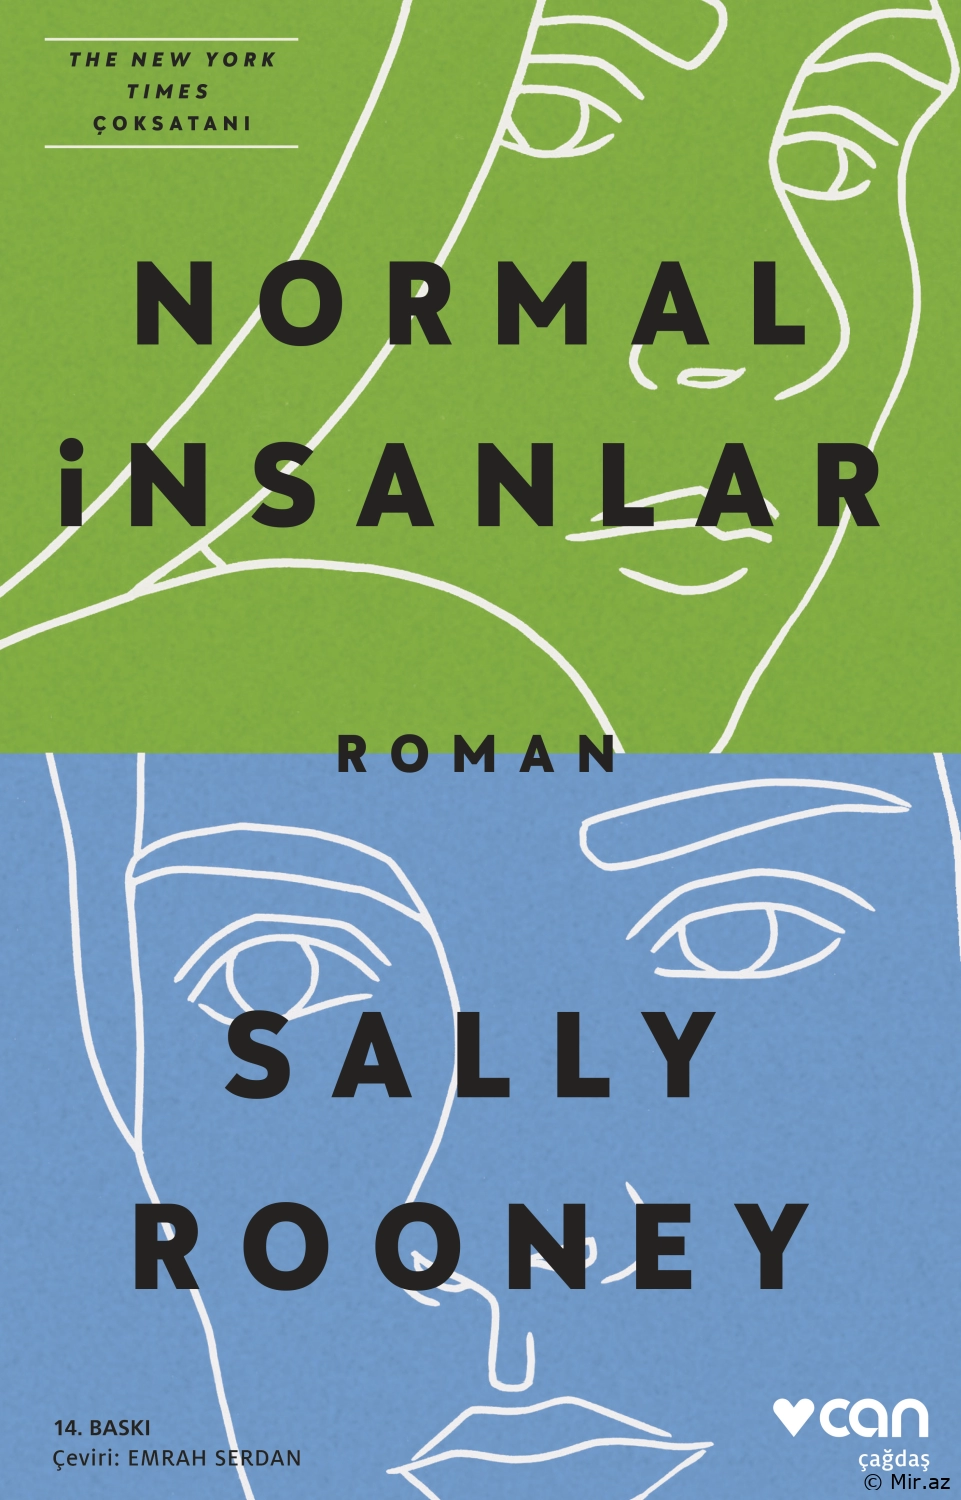 Sally Rooney "Normal insanlar" PDF